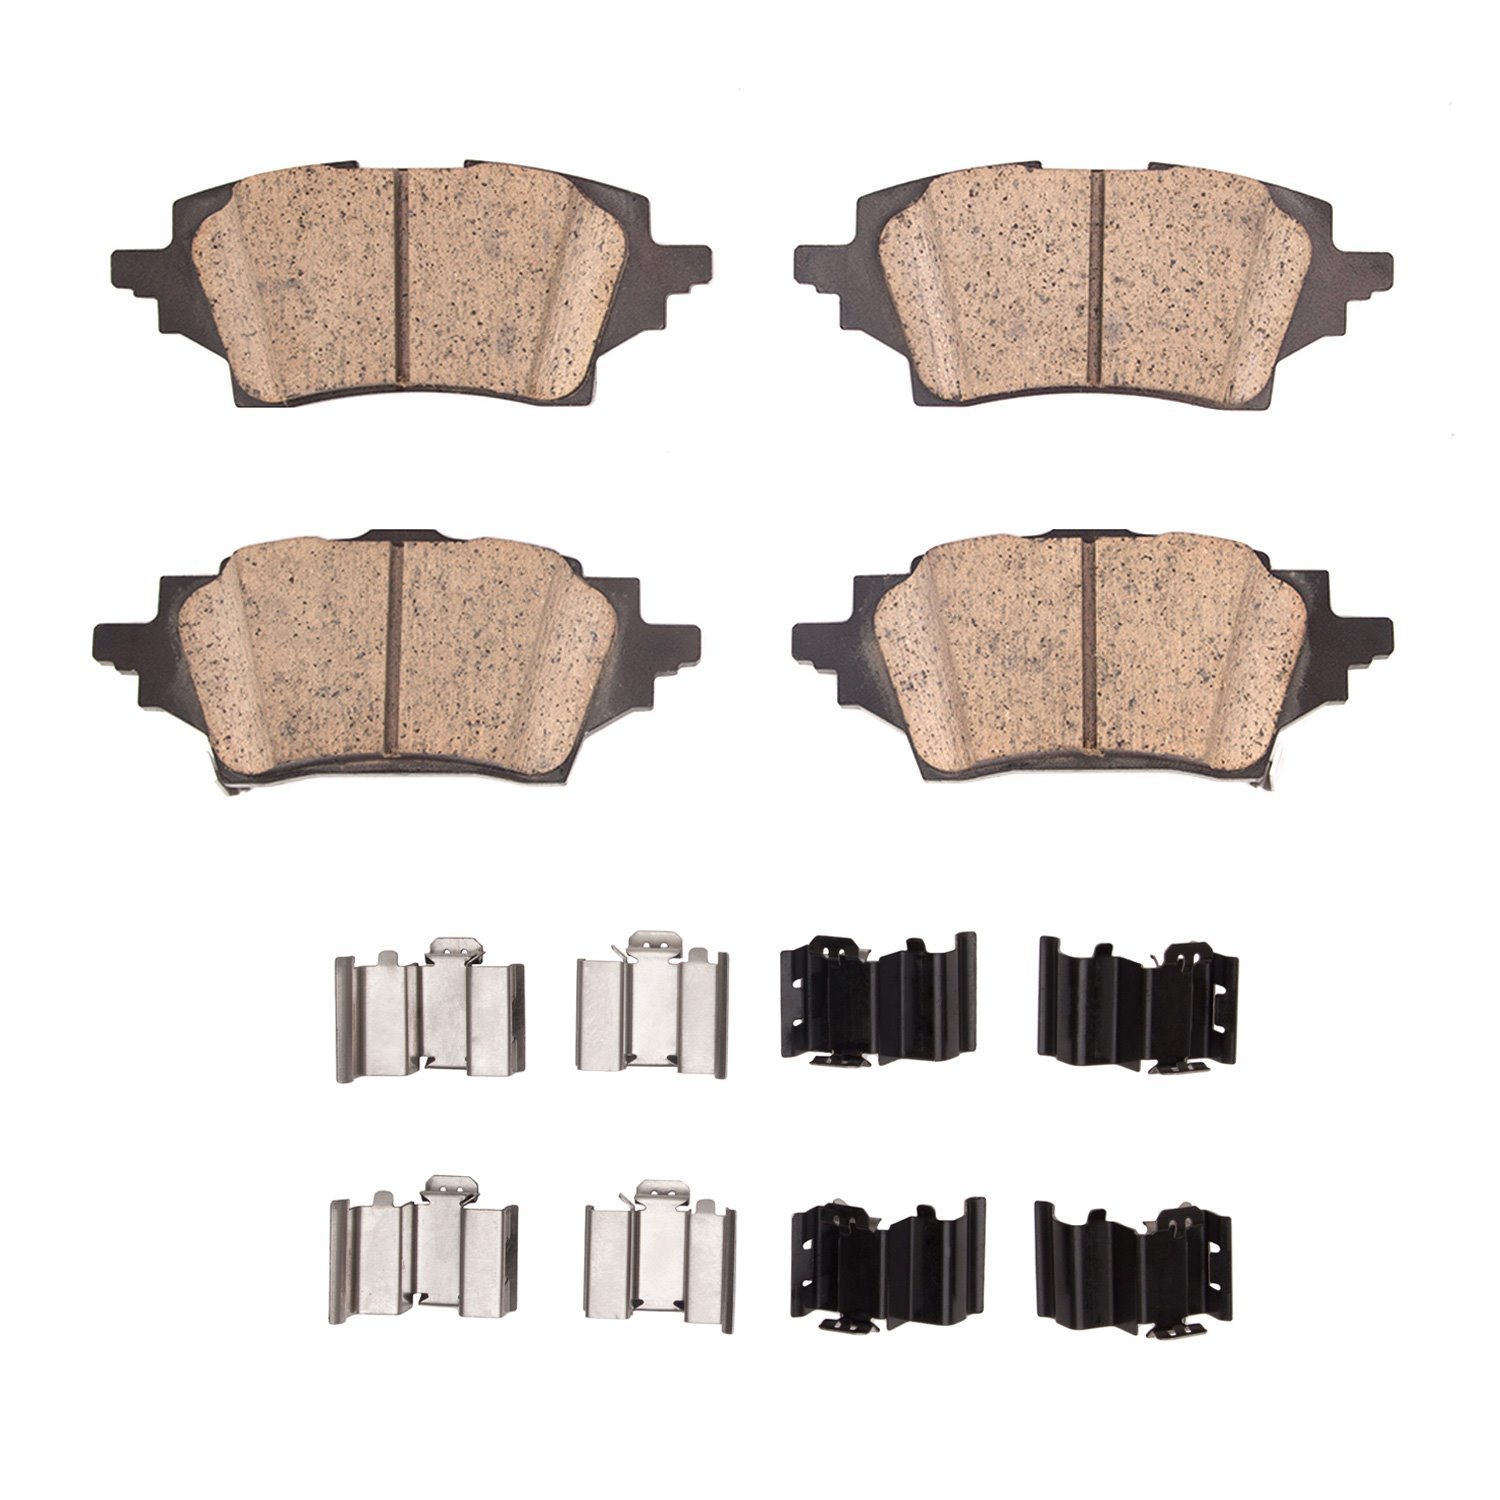 1310-2202-01 3000-Series Ceramic Brake Pads & Hardware Kit, Fits Select Lexus/Toyota/Scion, Position: Rear